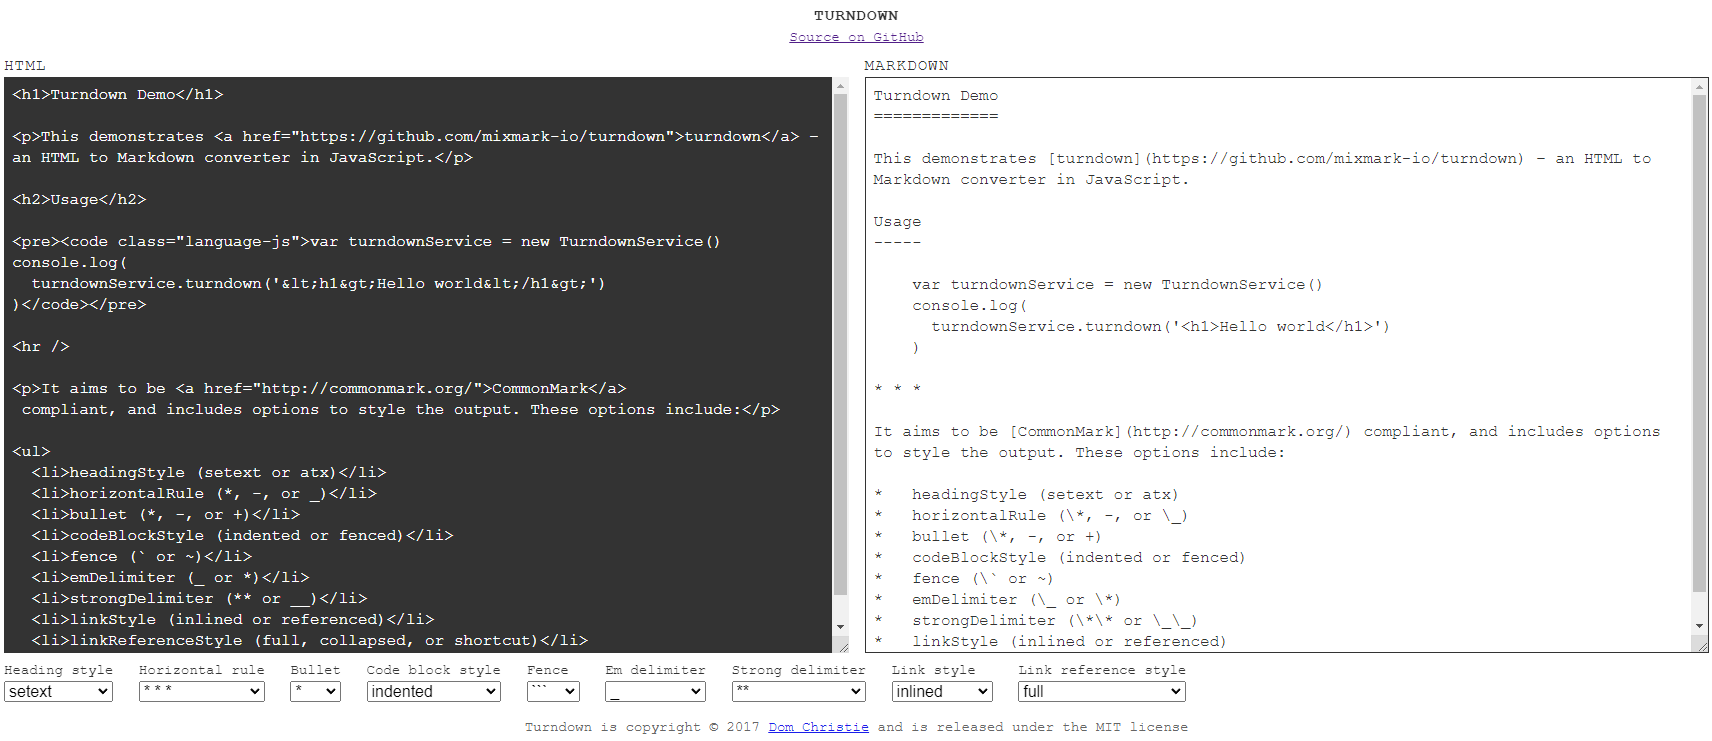 Turndown HTML to Markdown converter interface